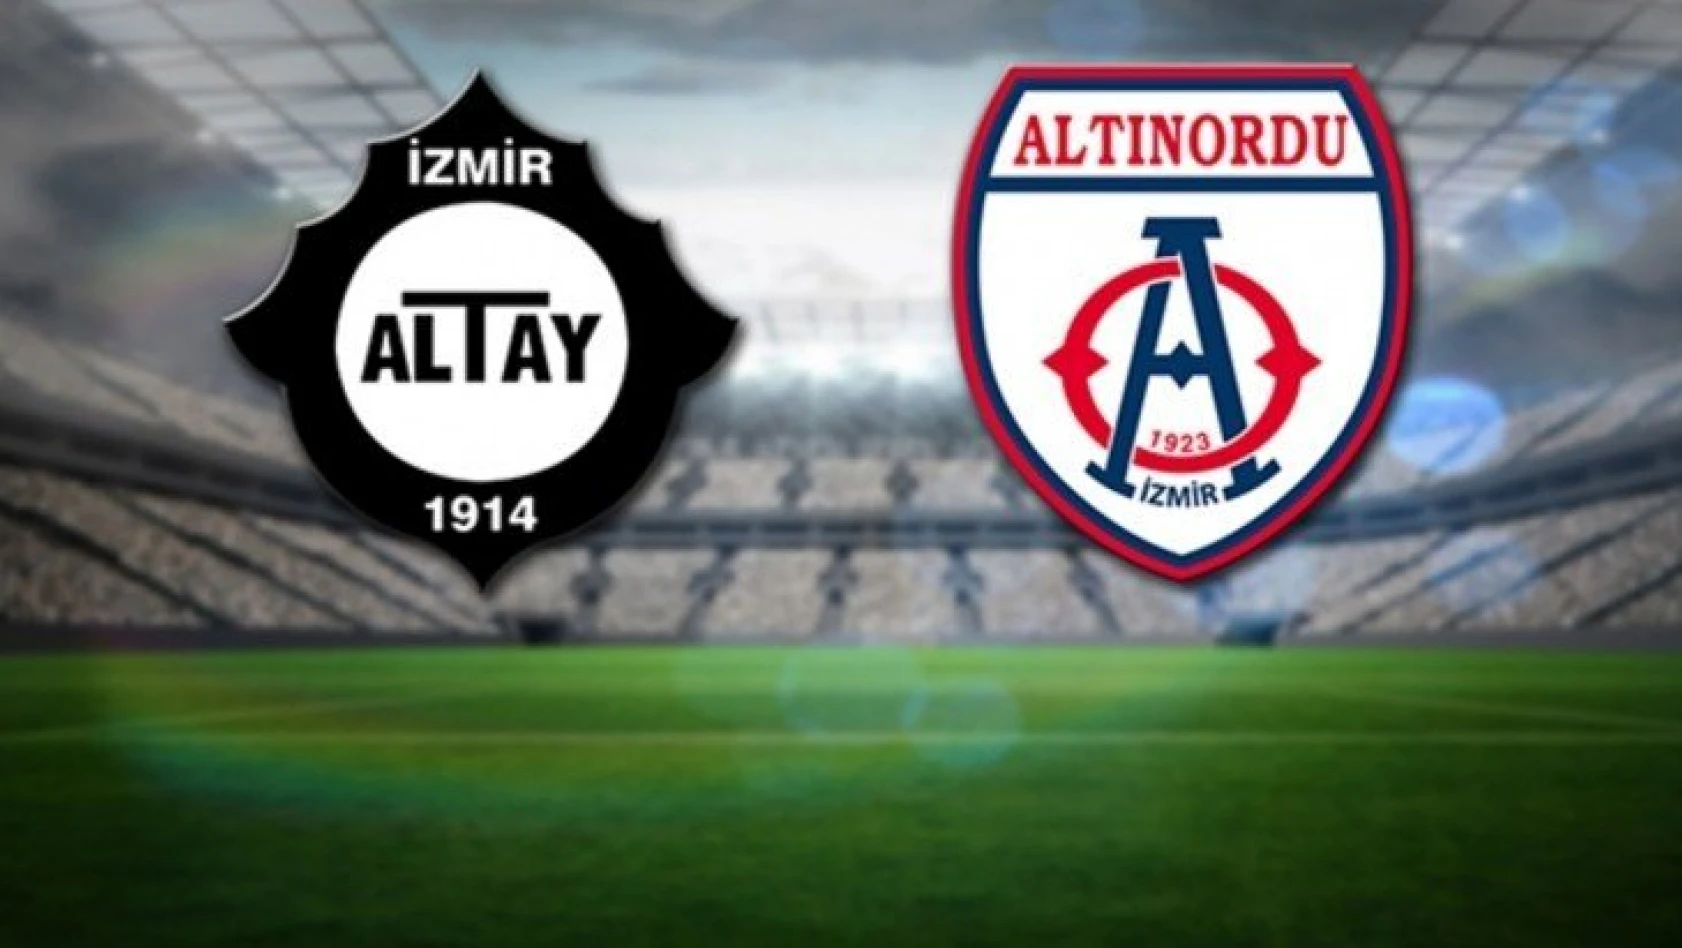 Altay-Altınordu play-off finalinin stadı belli oldu